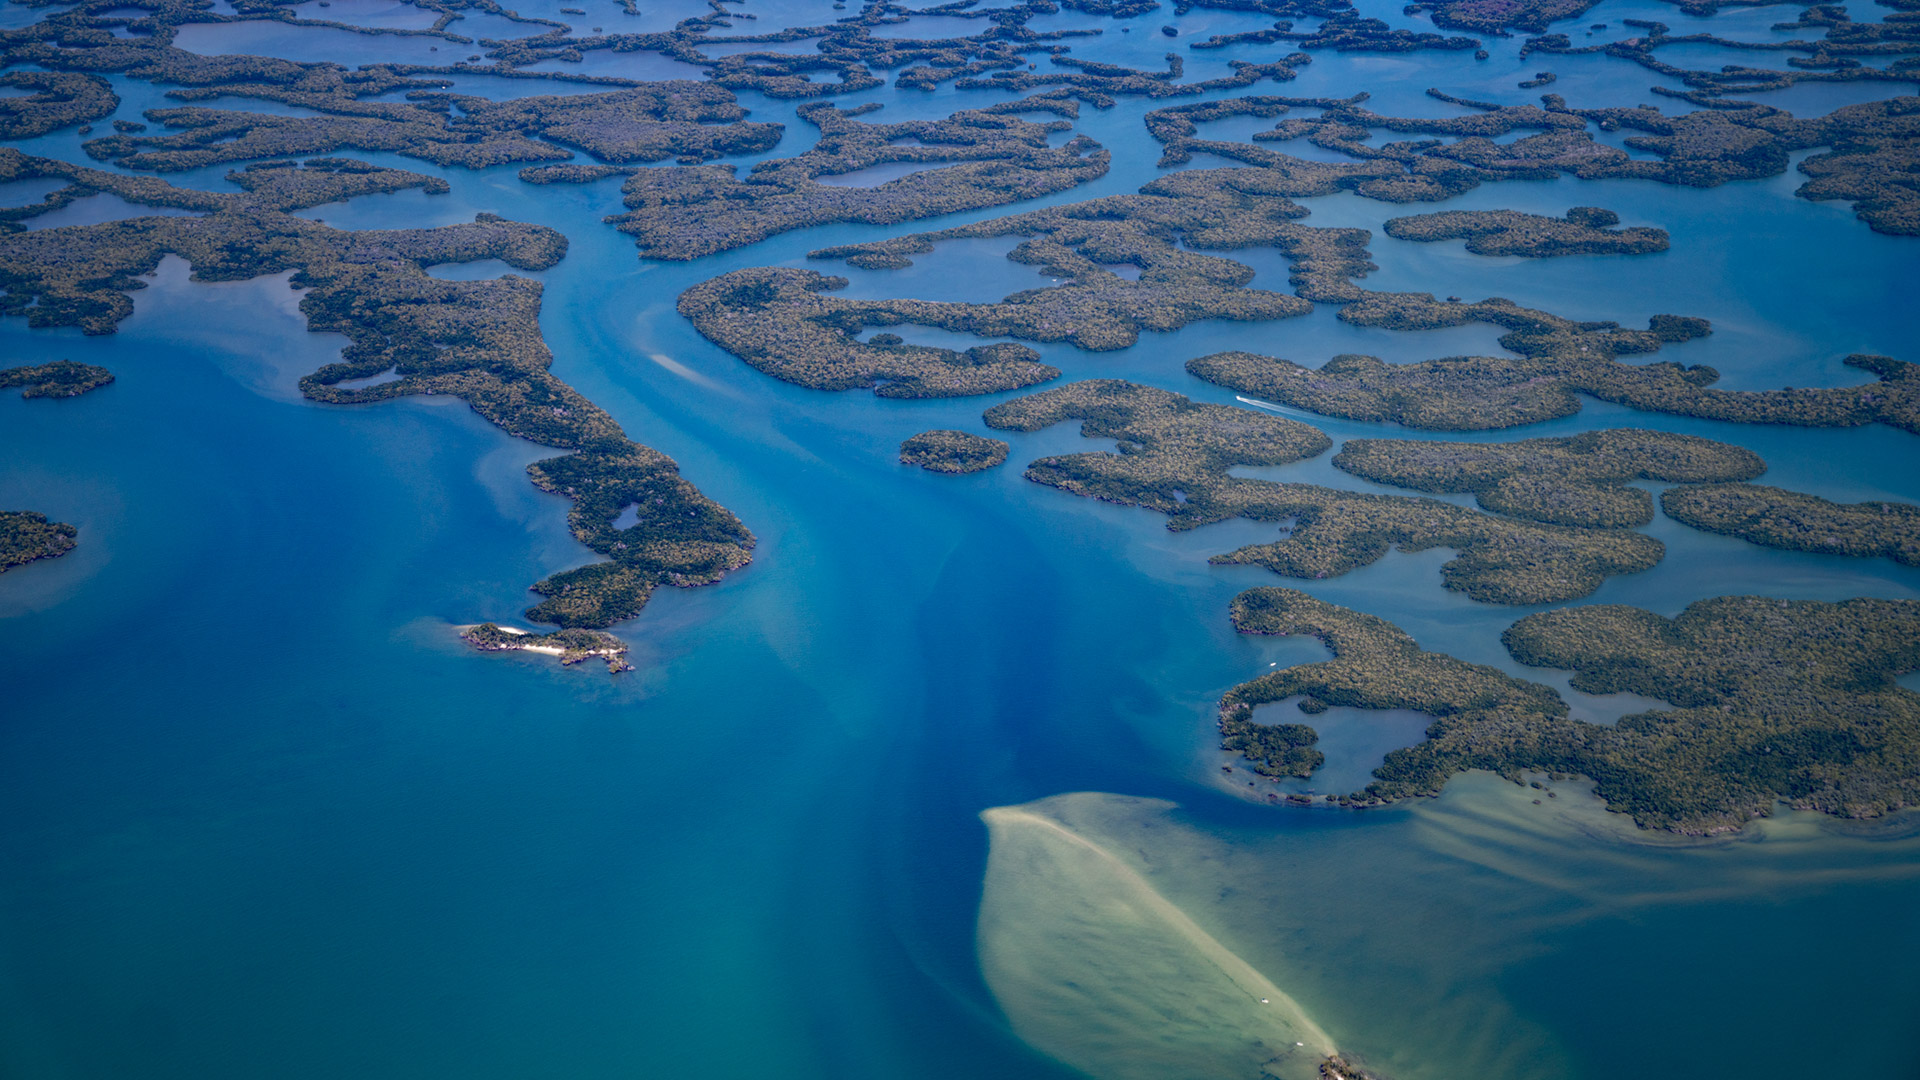 Florida's Ten Thousand Islands